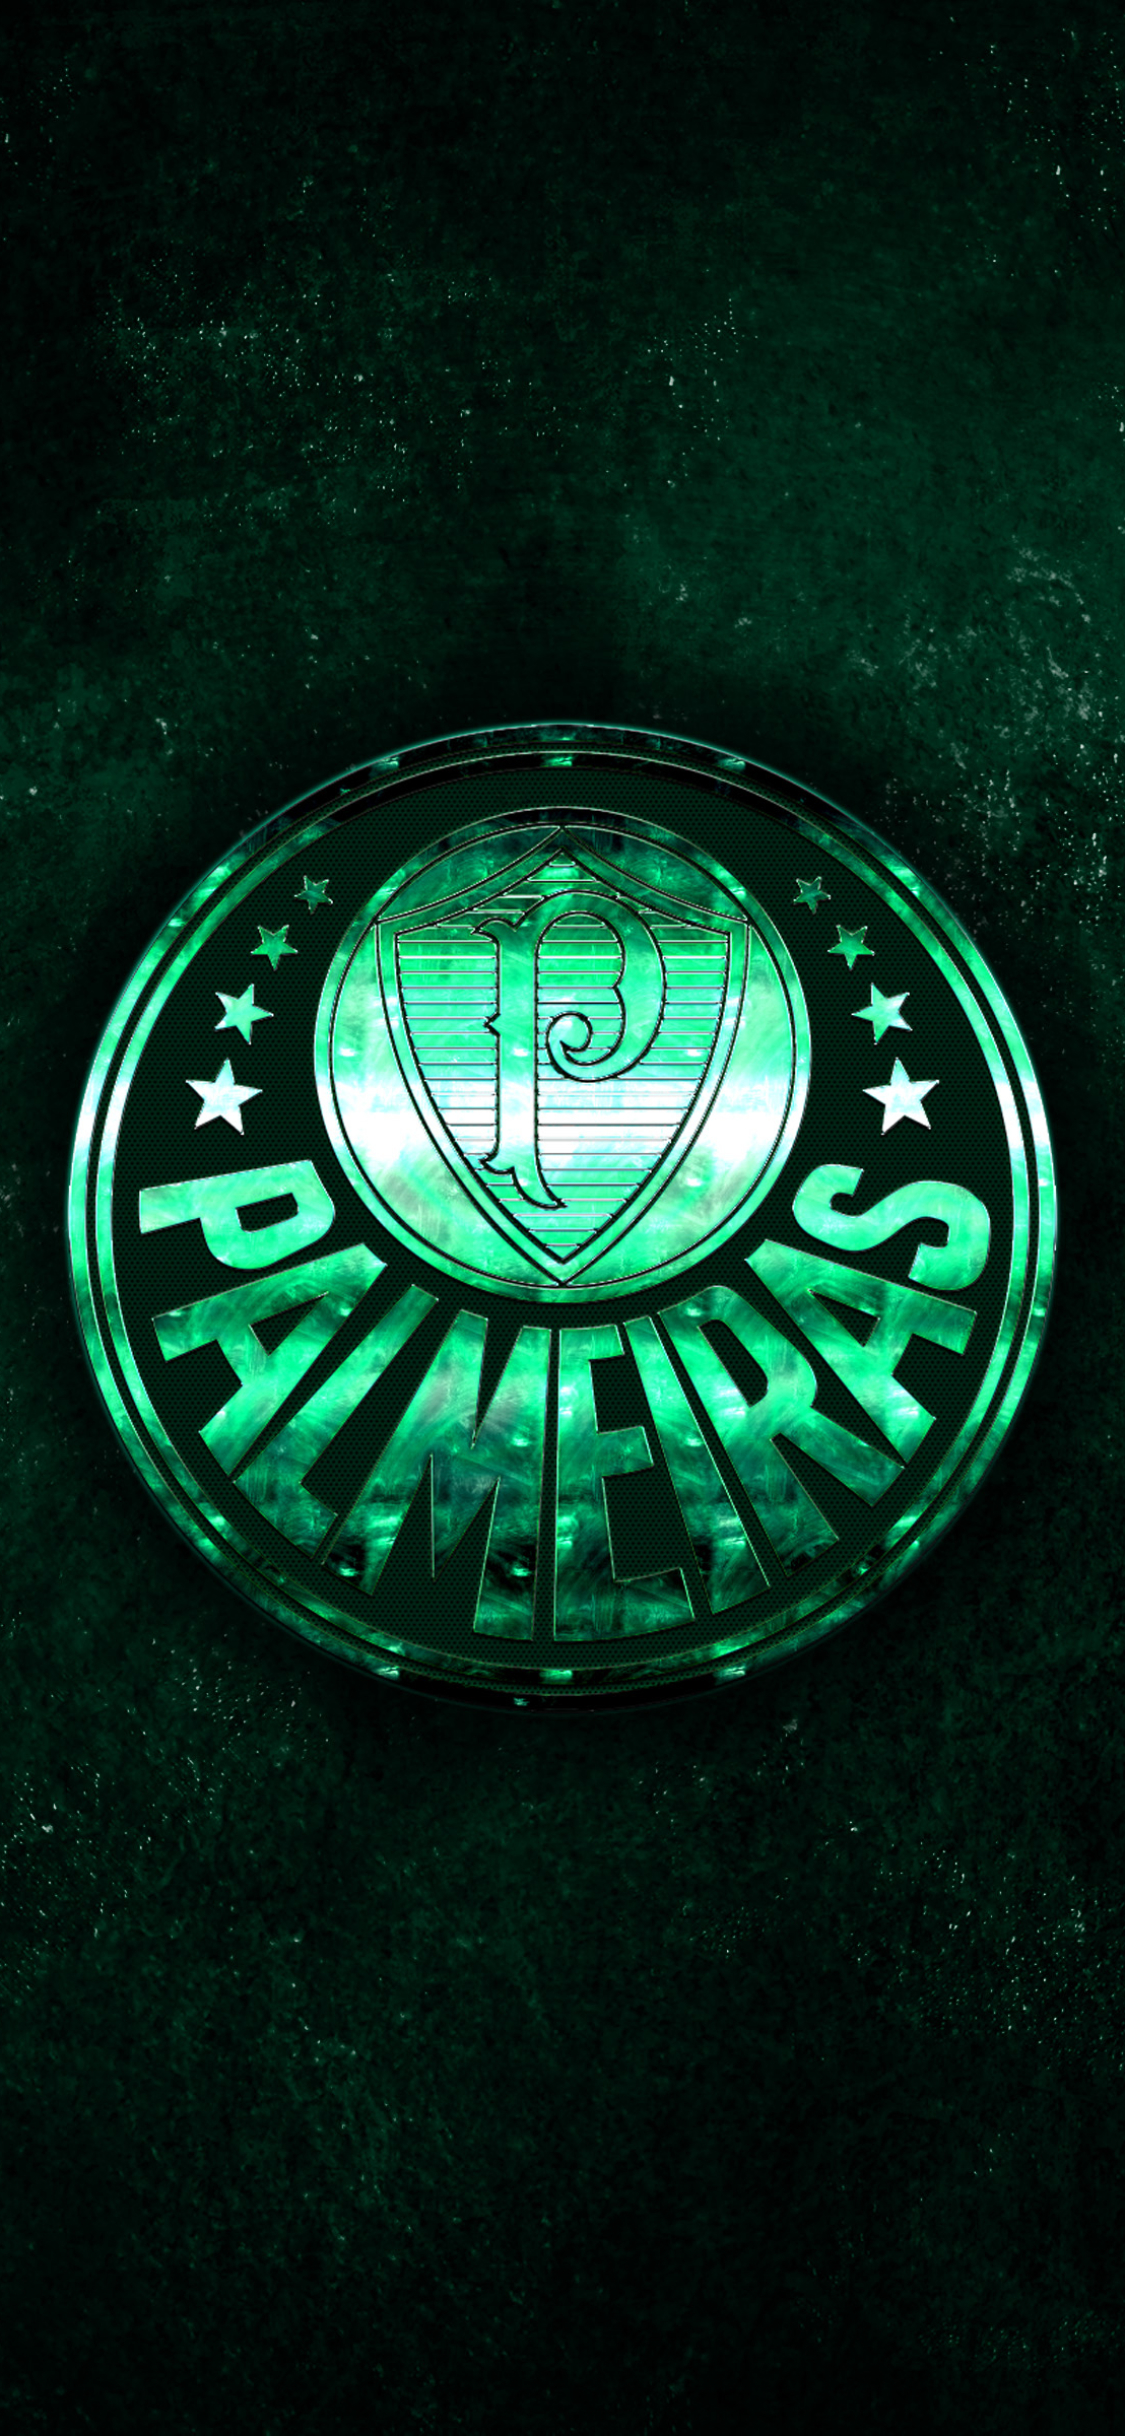 Baixar papel de parede para celular de Esportes, Futebol, Logotipo, Emblema, Sociedade Esportiva Palmeiras gratuito.